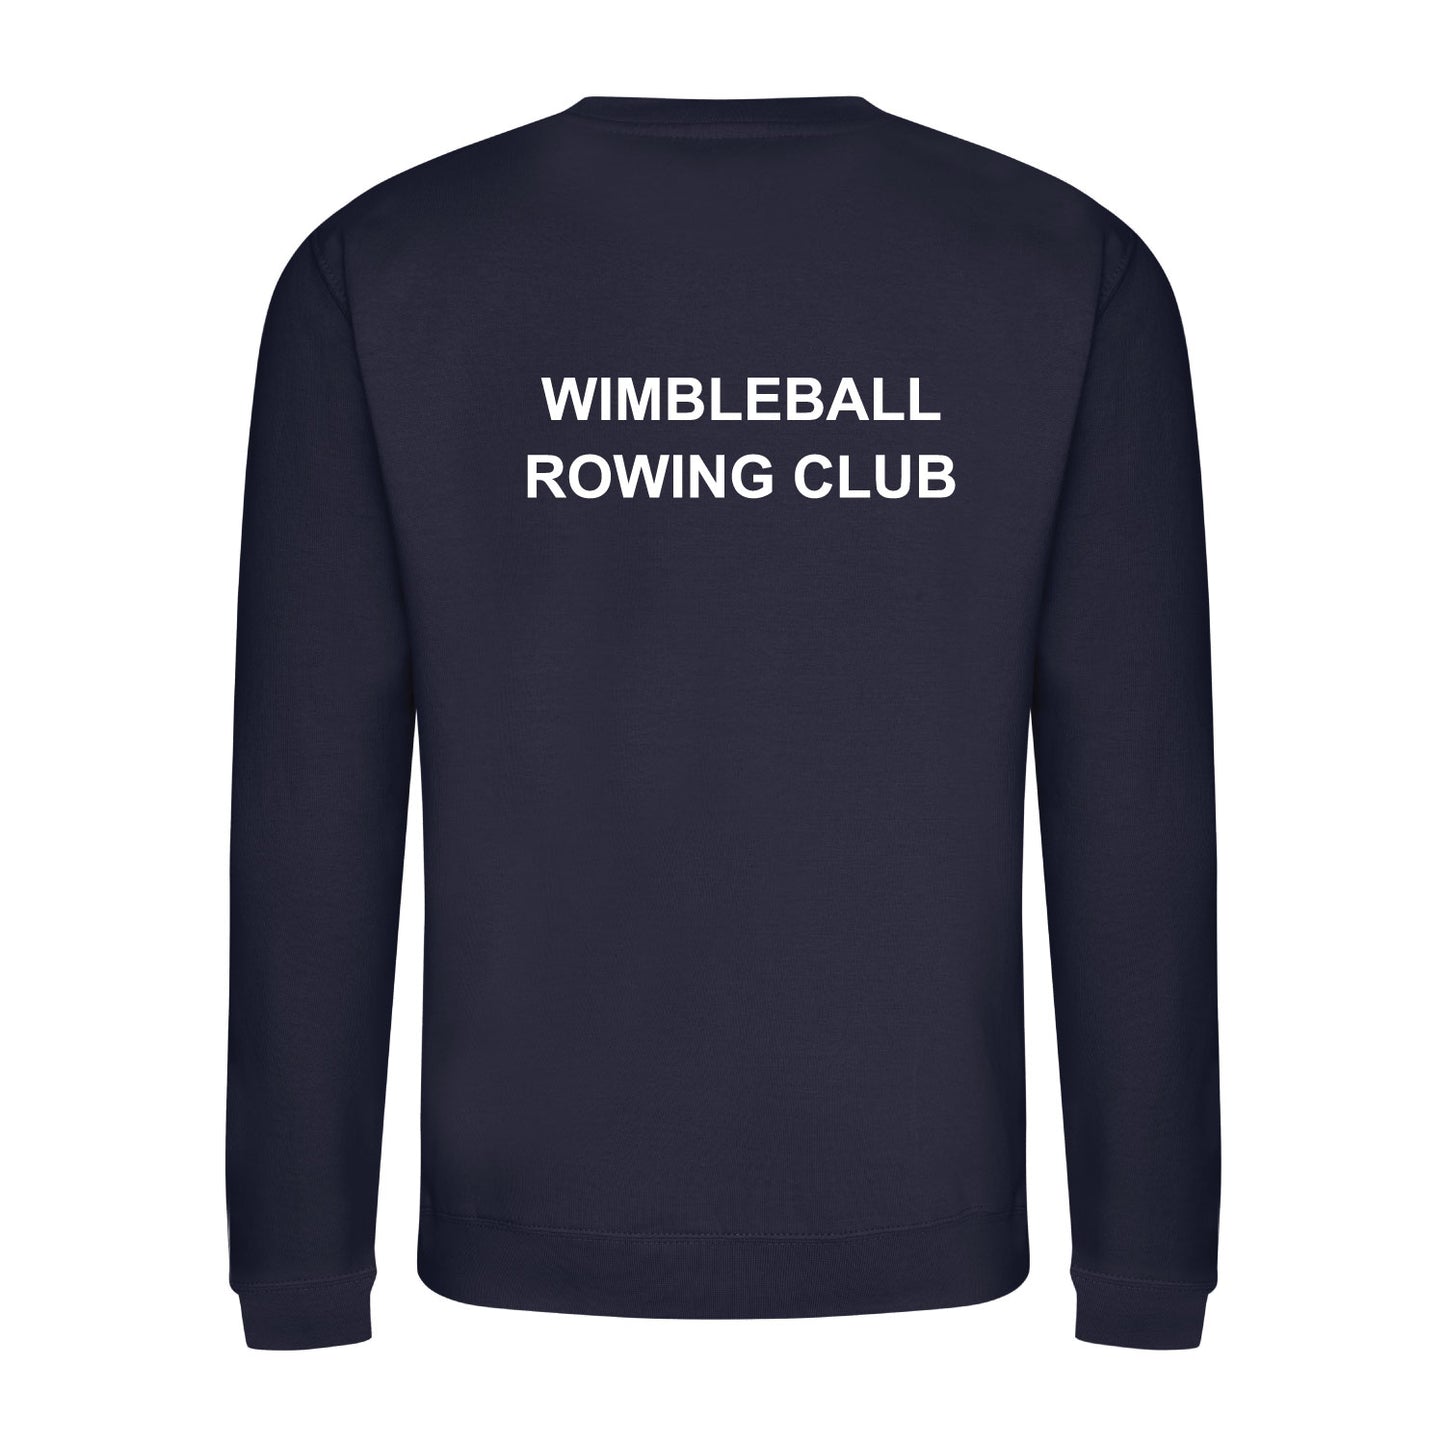 Wimbleball Rowing Club Sweatshirt